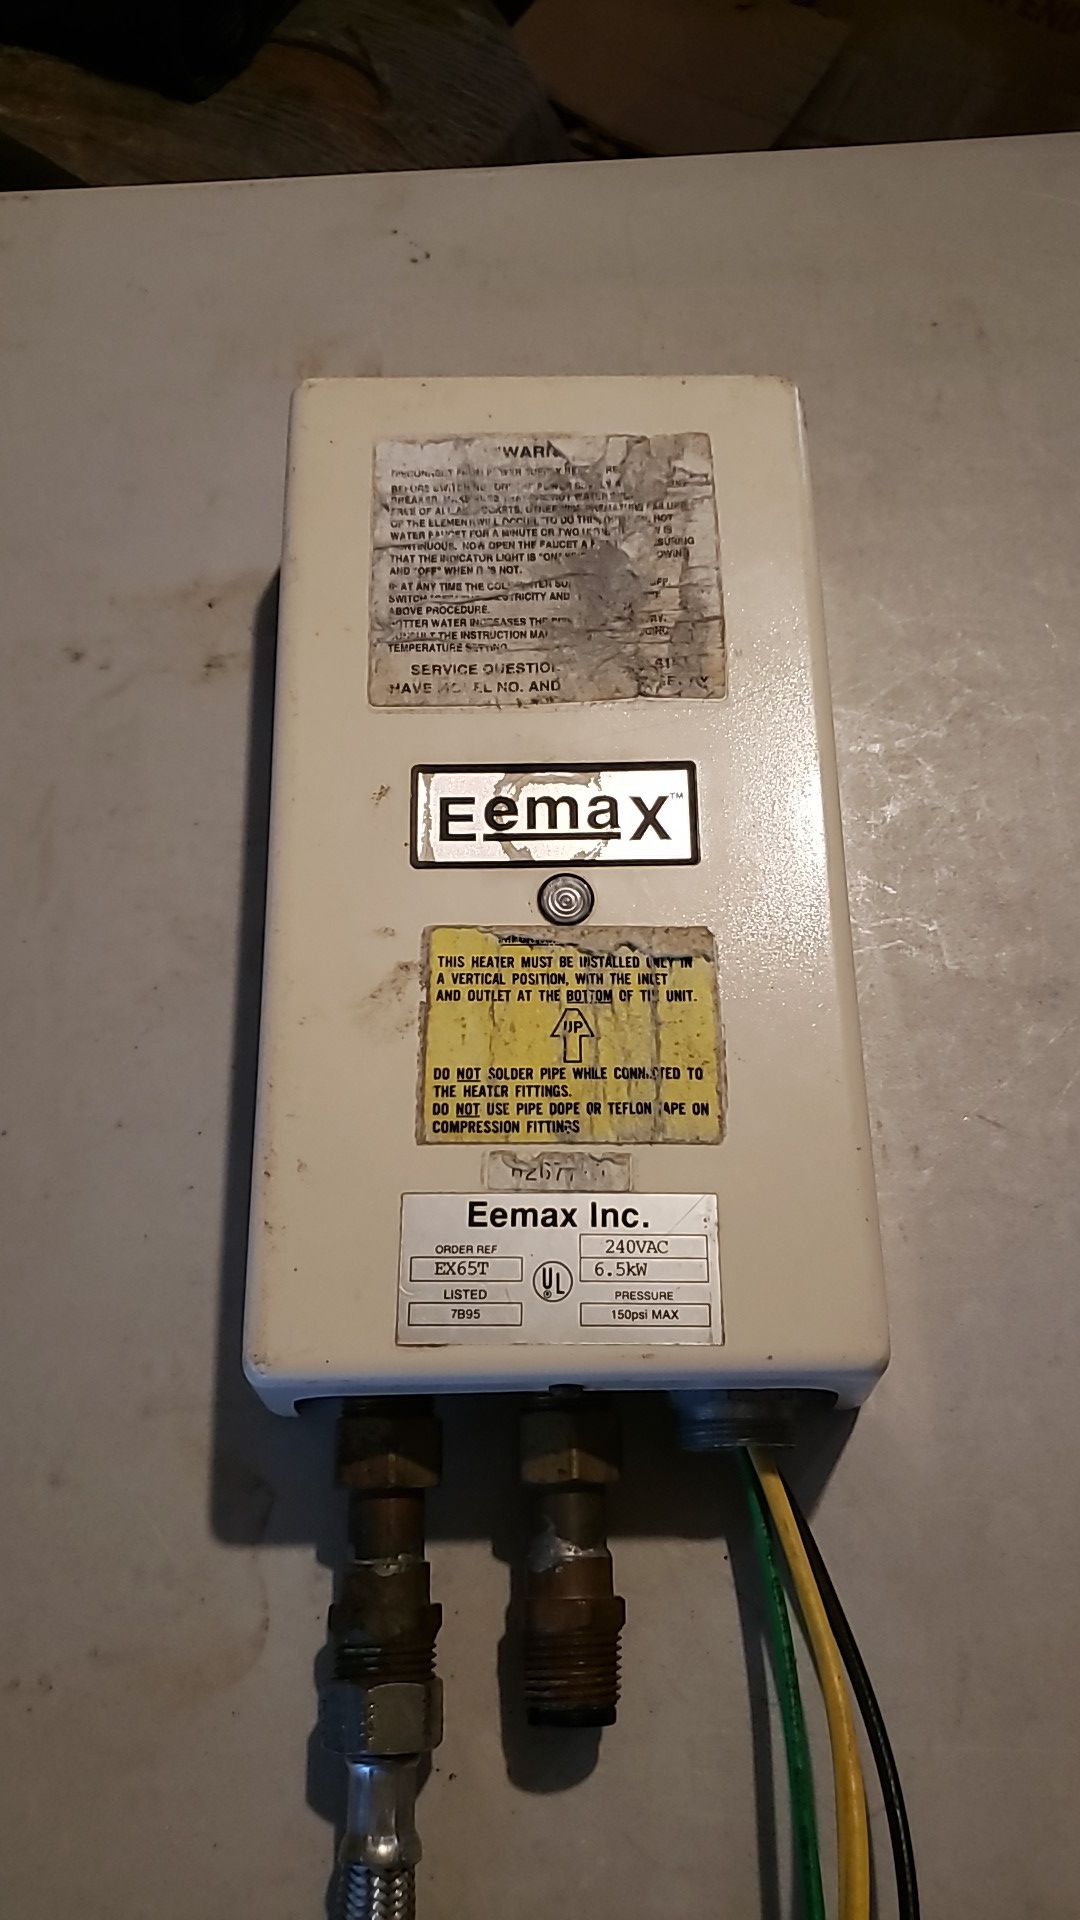 Eemax Tankless water heater